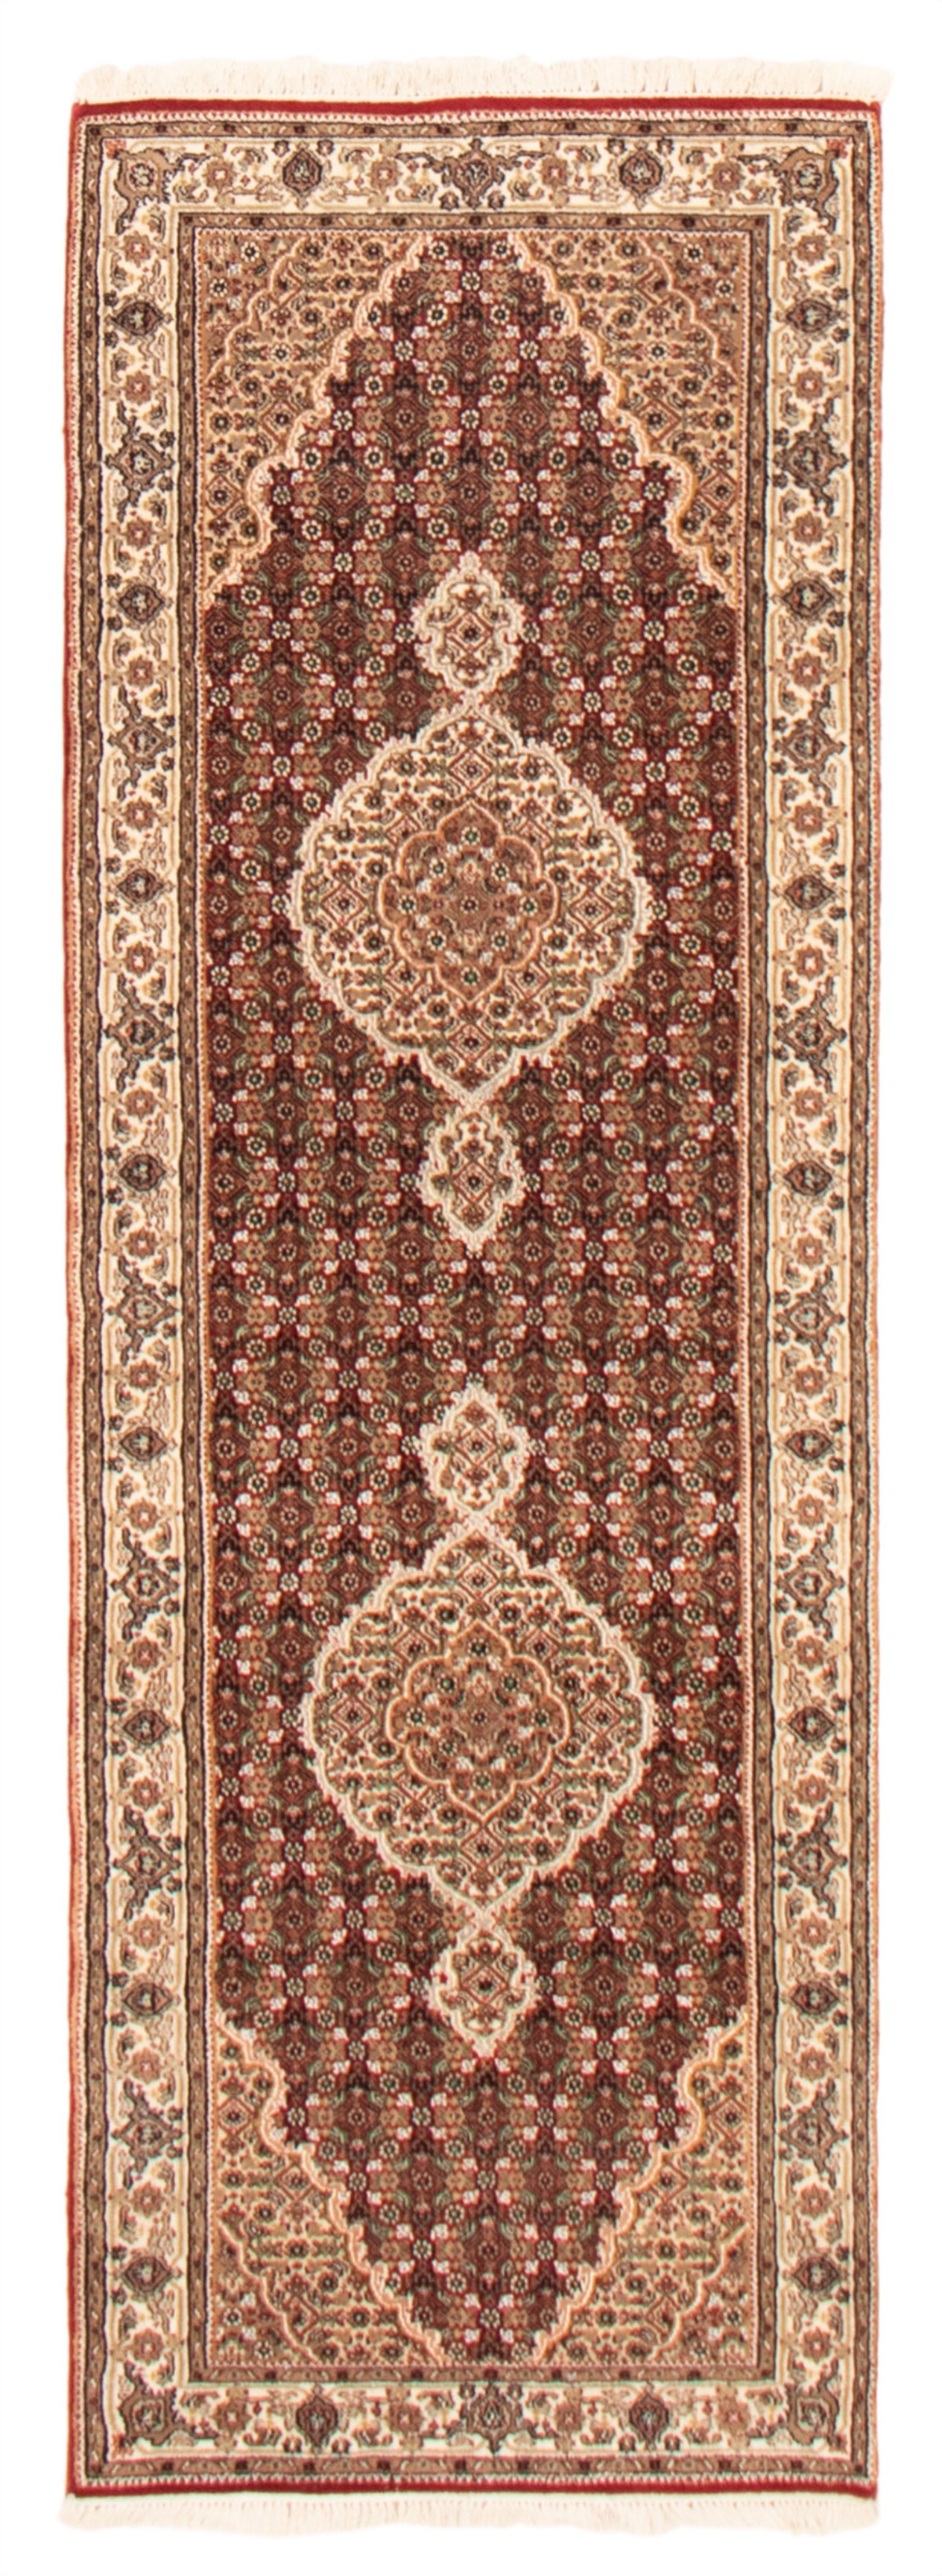 Hand-knotted Tabriz Haj Jalili Red Wool Rug 2'9" x 8'1" Size: 2'9" x 8'1"  